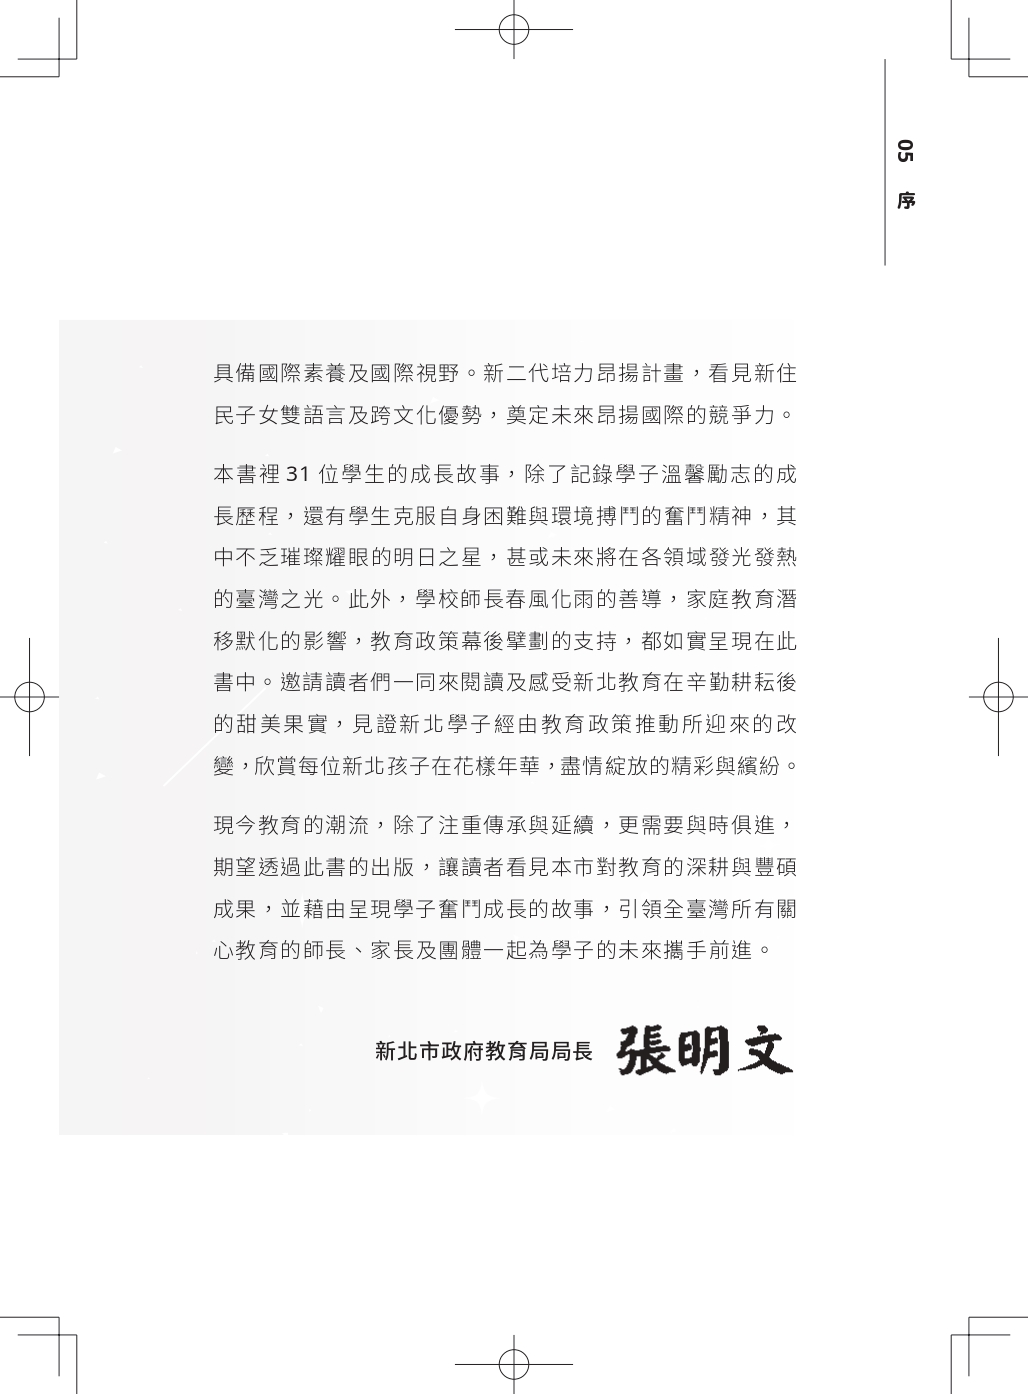 局長序page2